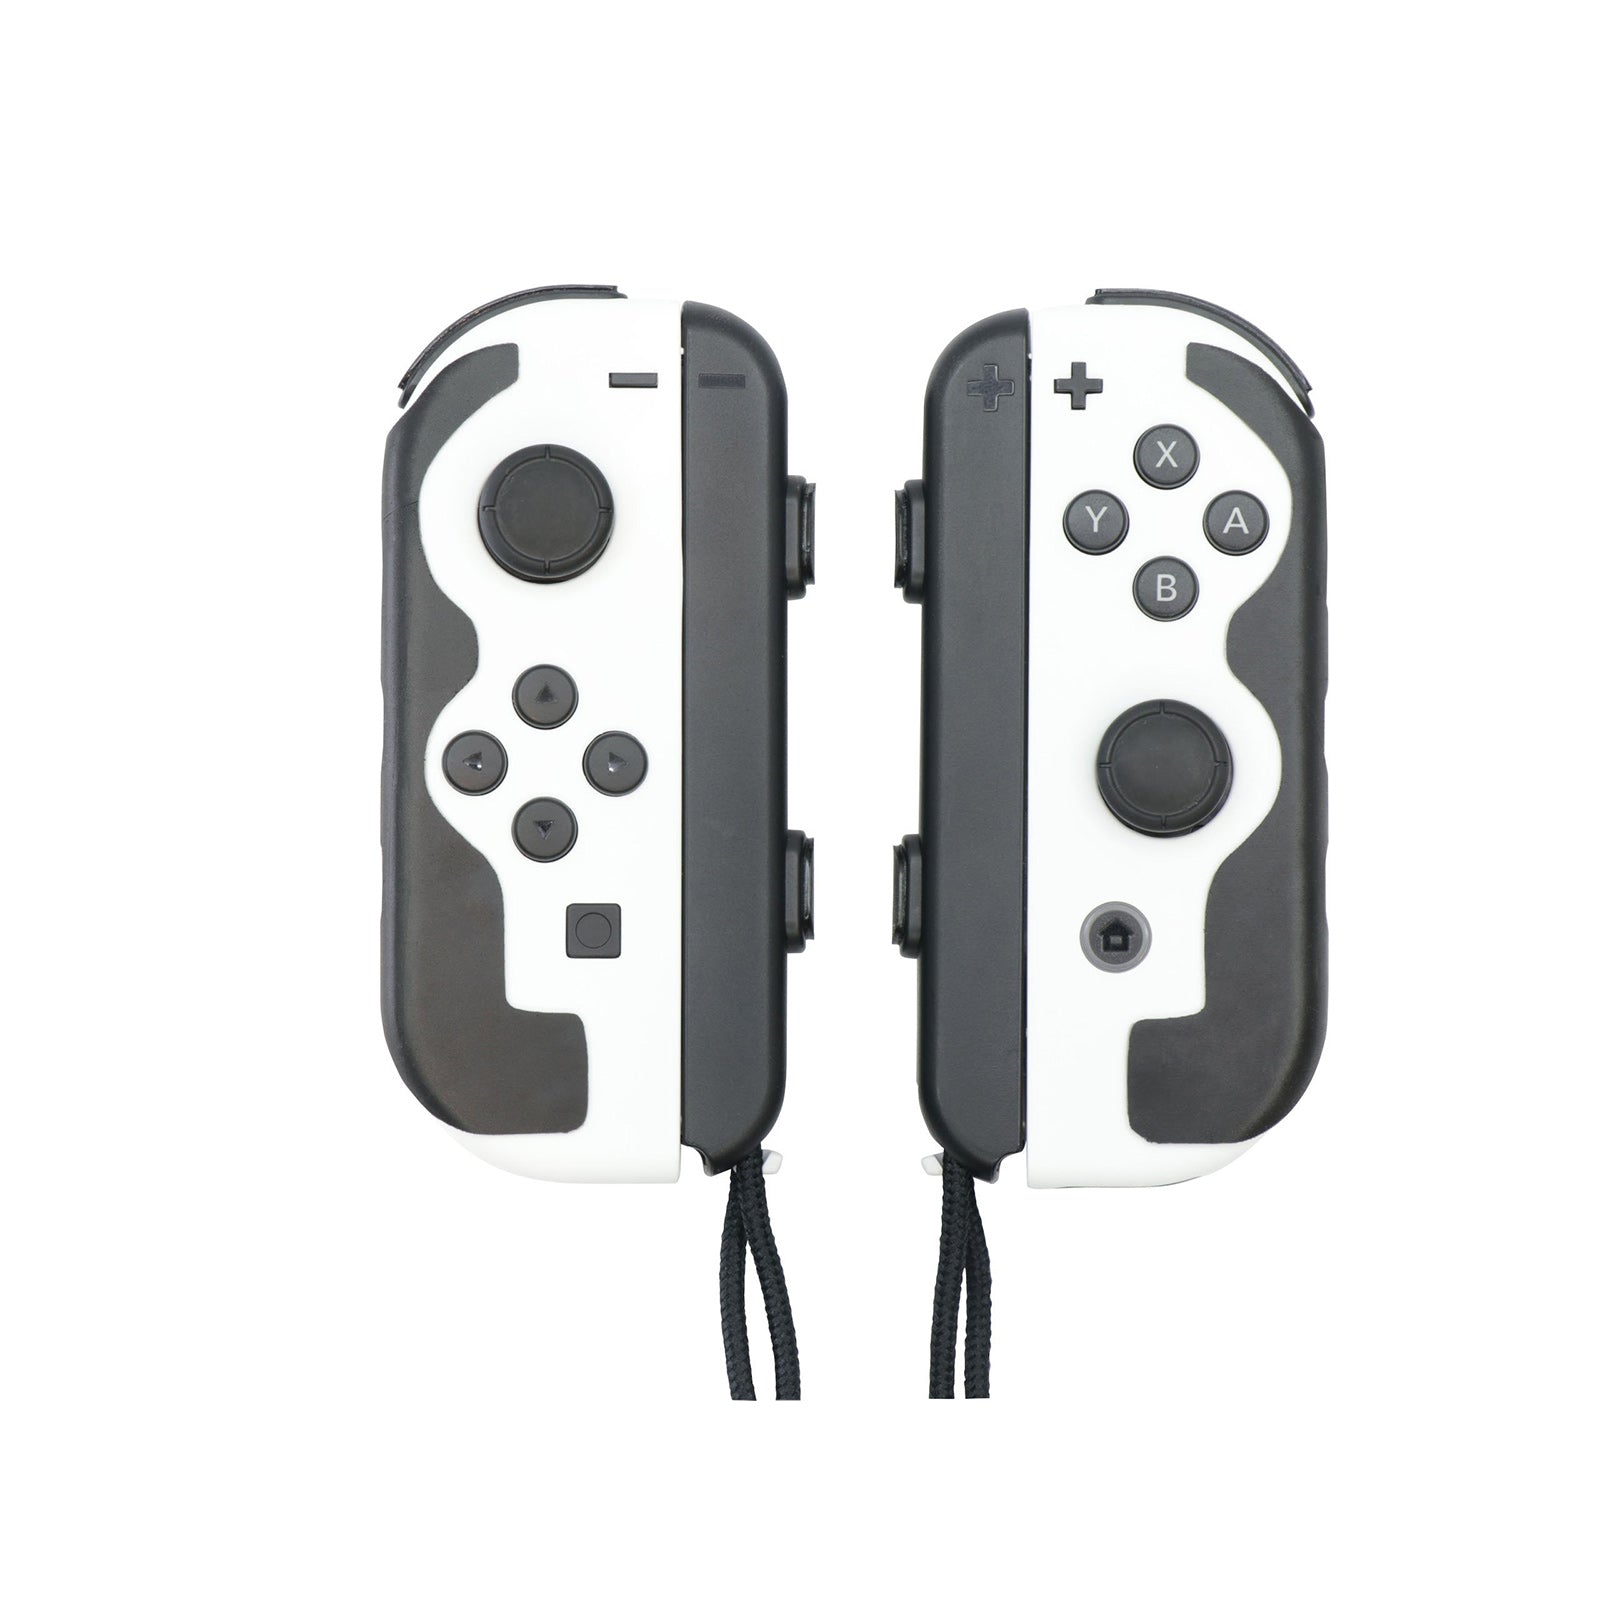 Spille computerspil ligning Klassificer Setex® Game Controller Grips - For Nintendo Switch Joy Con